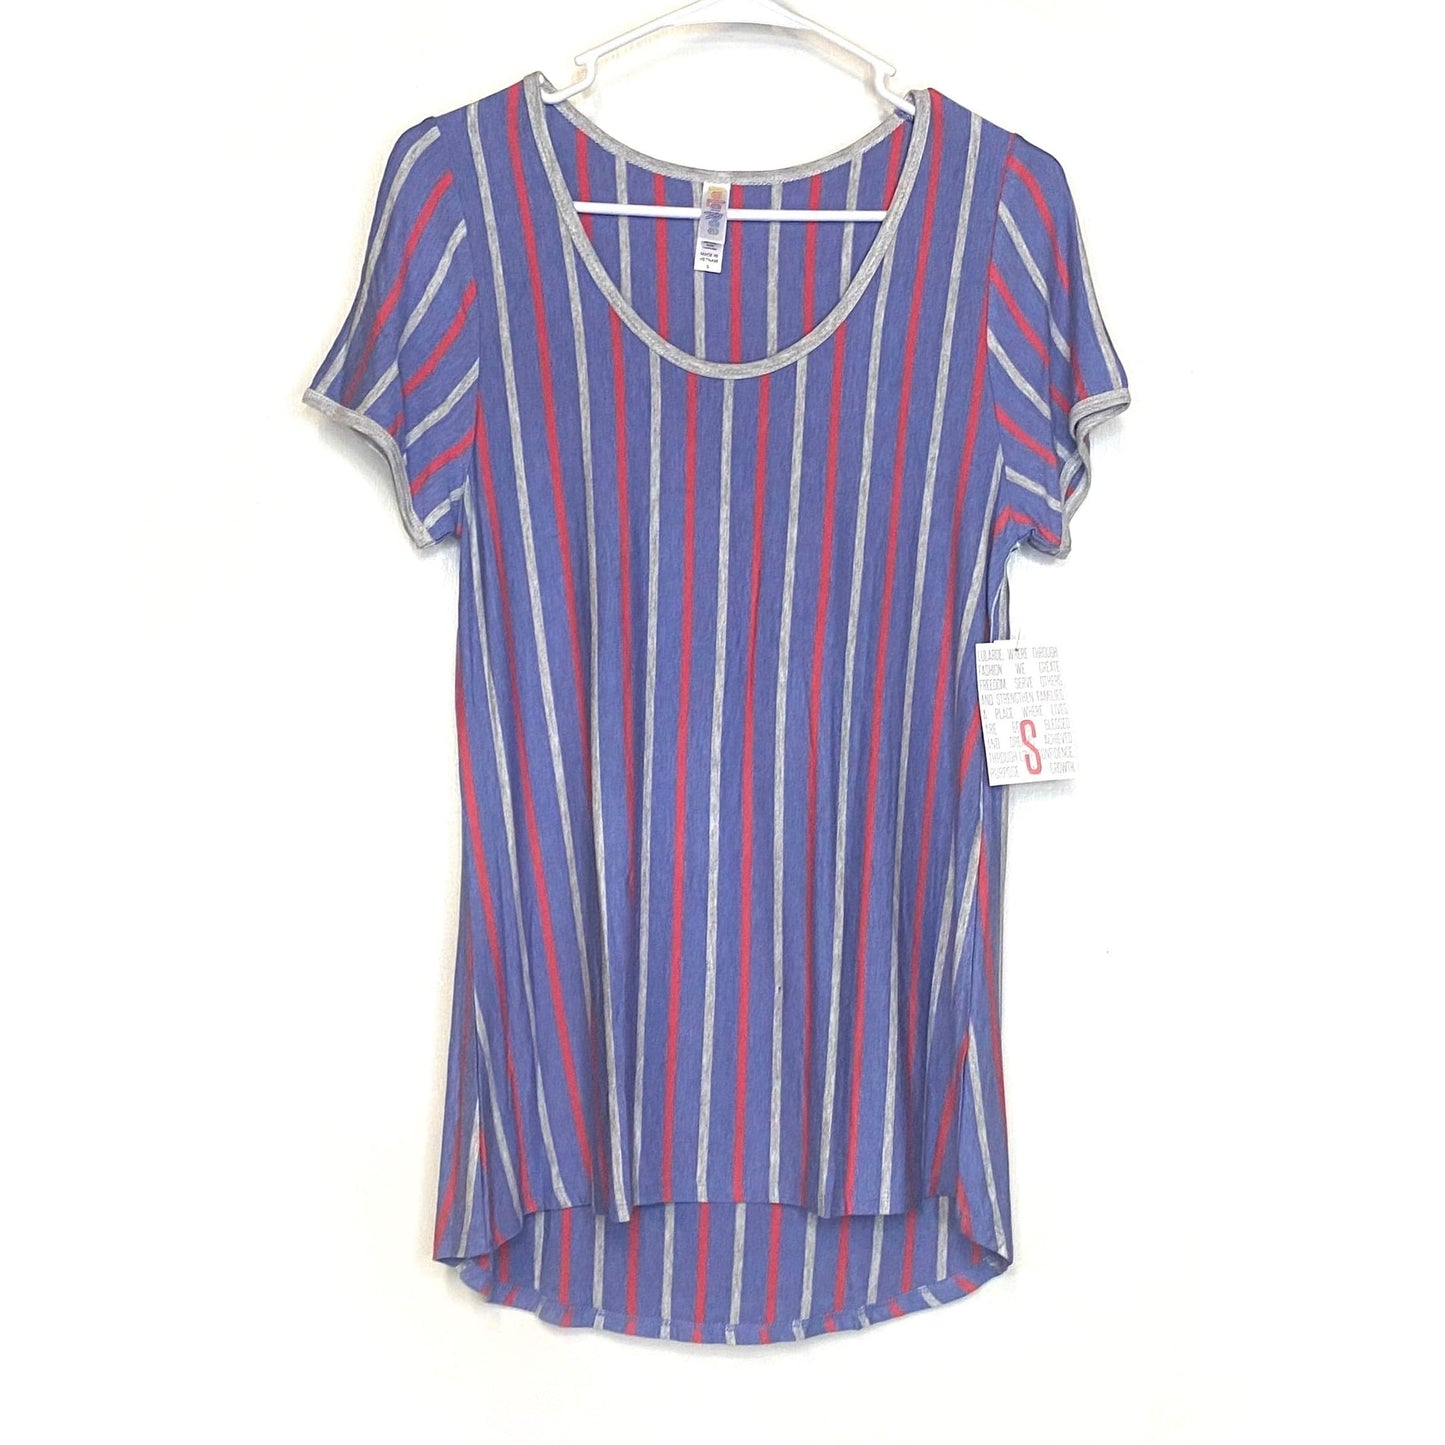 LuLaRoe Womens S Red/Gray/Blue Classic T Vertical Stripe T-Shirt S/s NWT